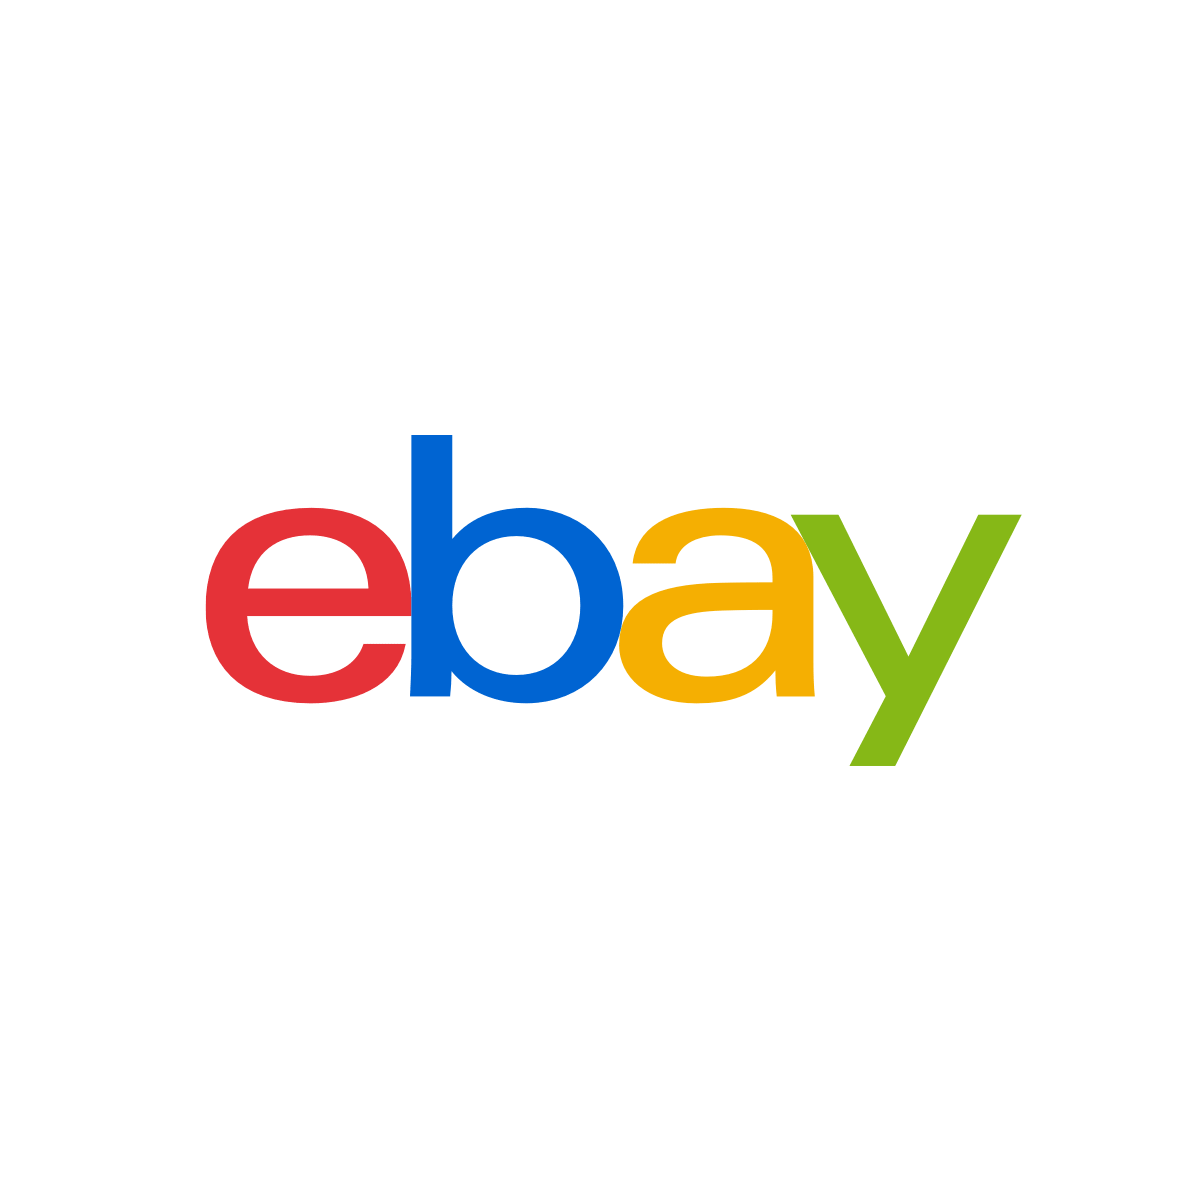 eBay: The Pioneering Marketplace that Revolutionized Online Commerce